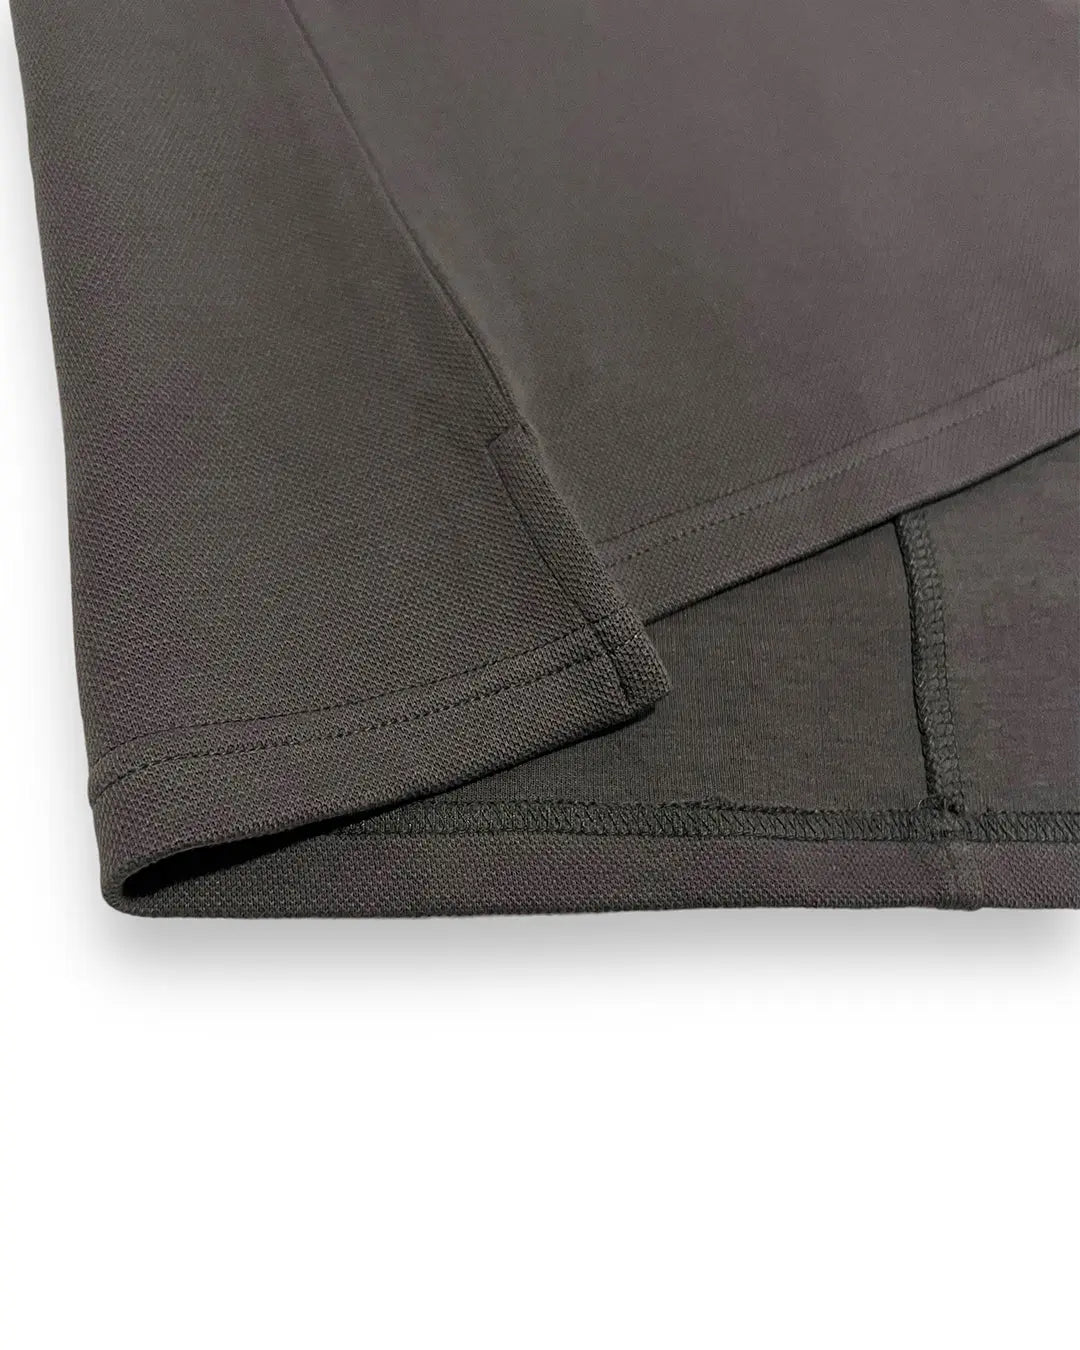 Oversized Shirt: Charcoal Grey XTZ APPAREL